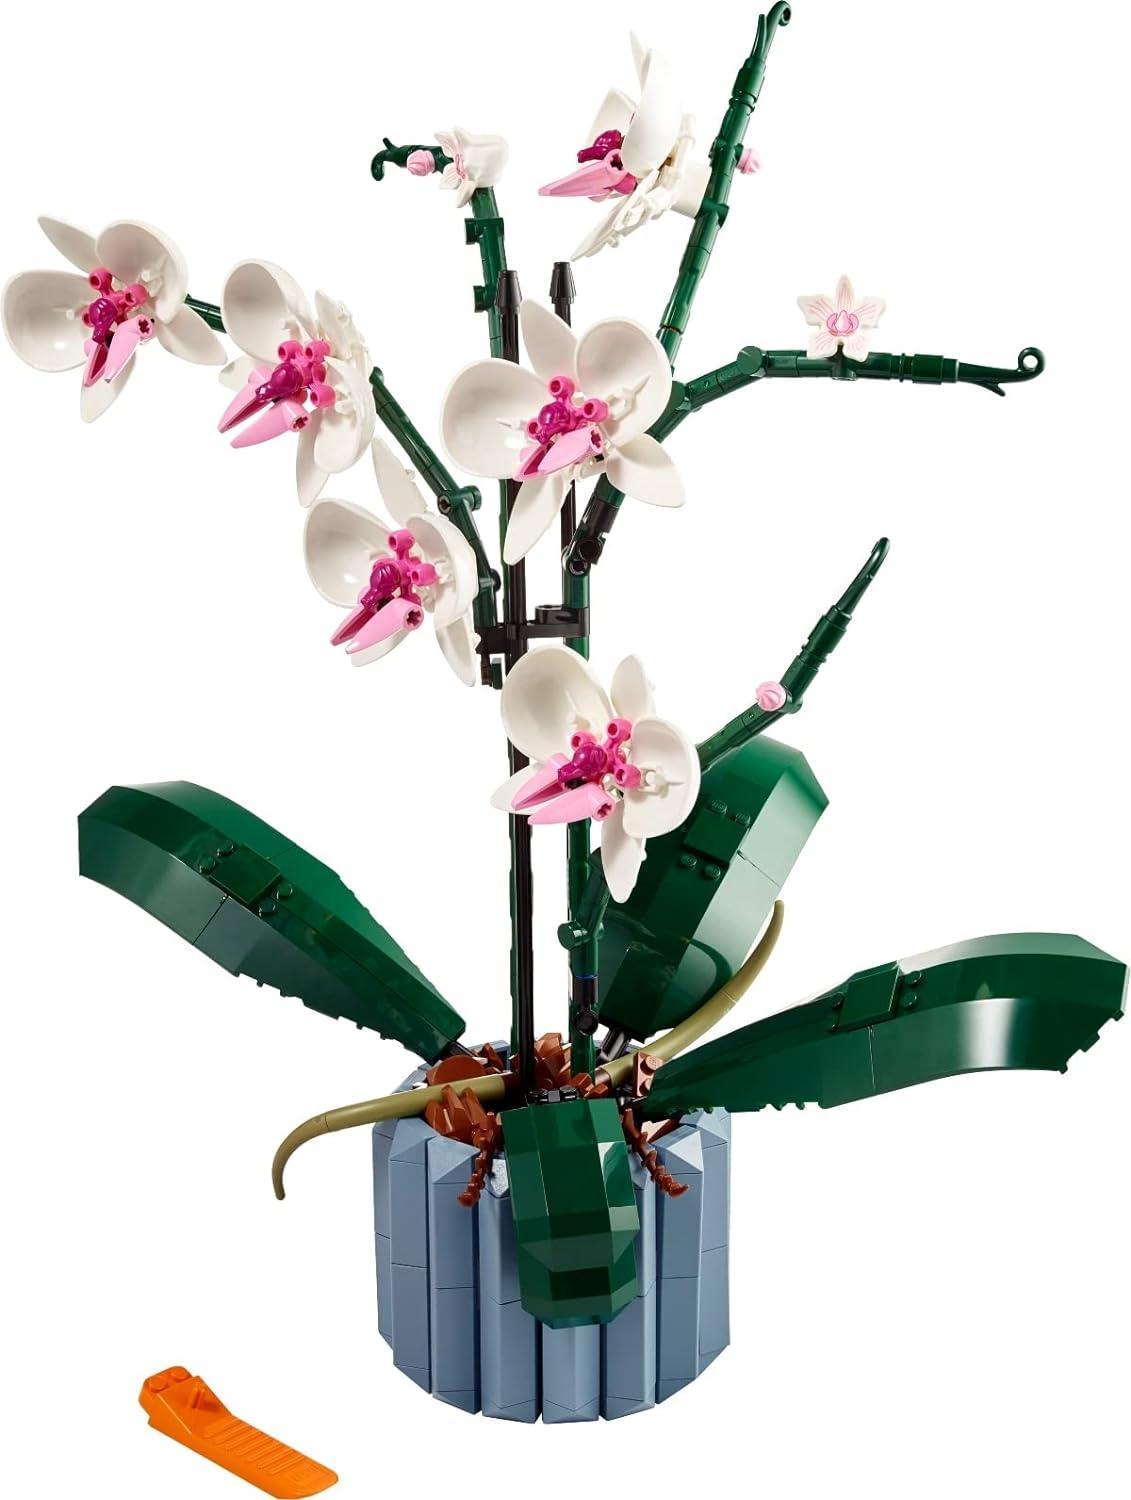 LEGO Combideal Botanische collectie editie 1 | 2TTOYS ✓ Official shop<br>